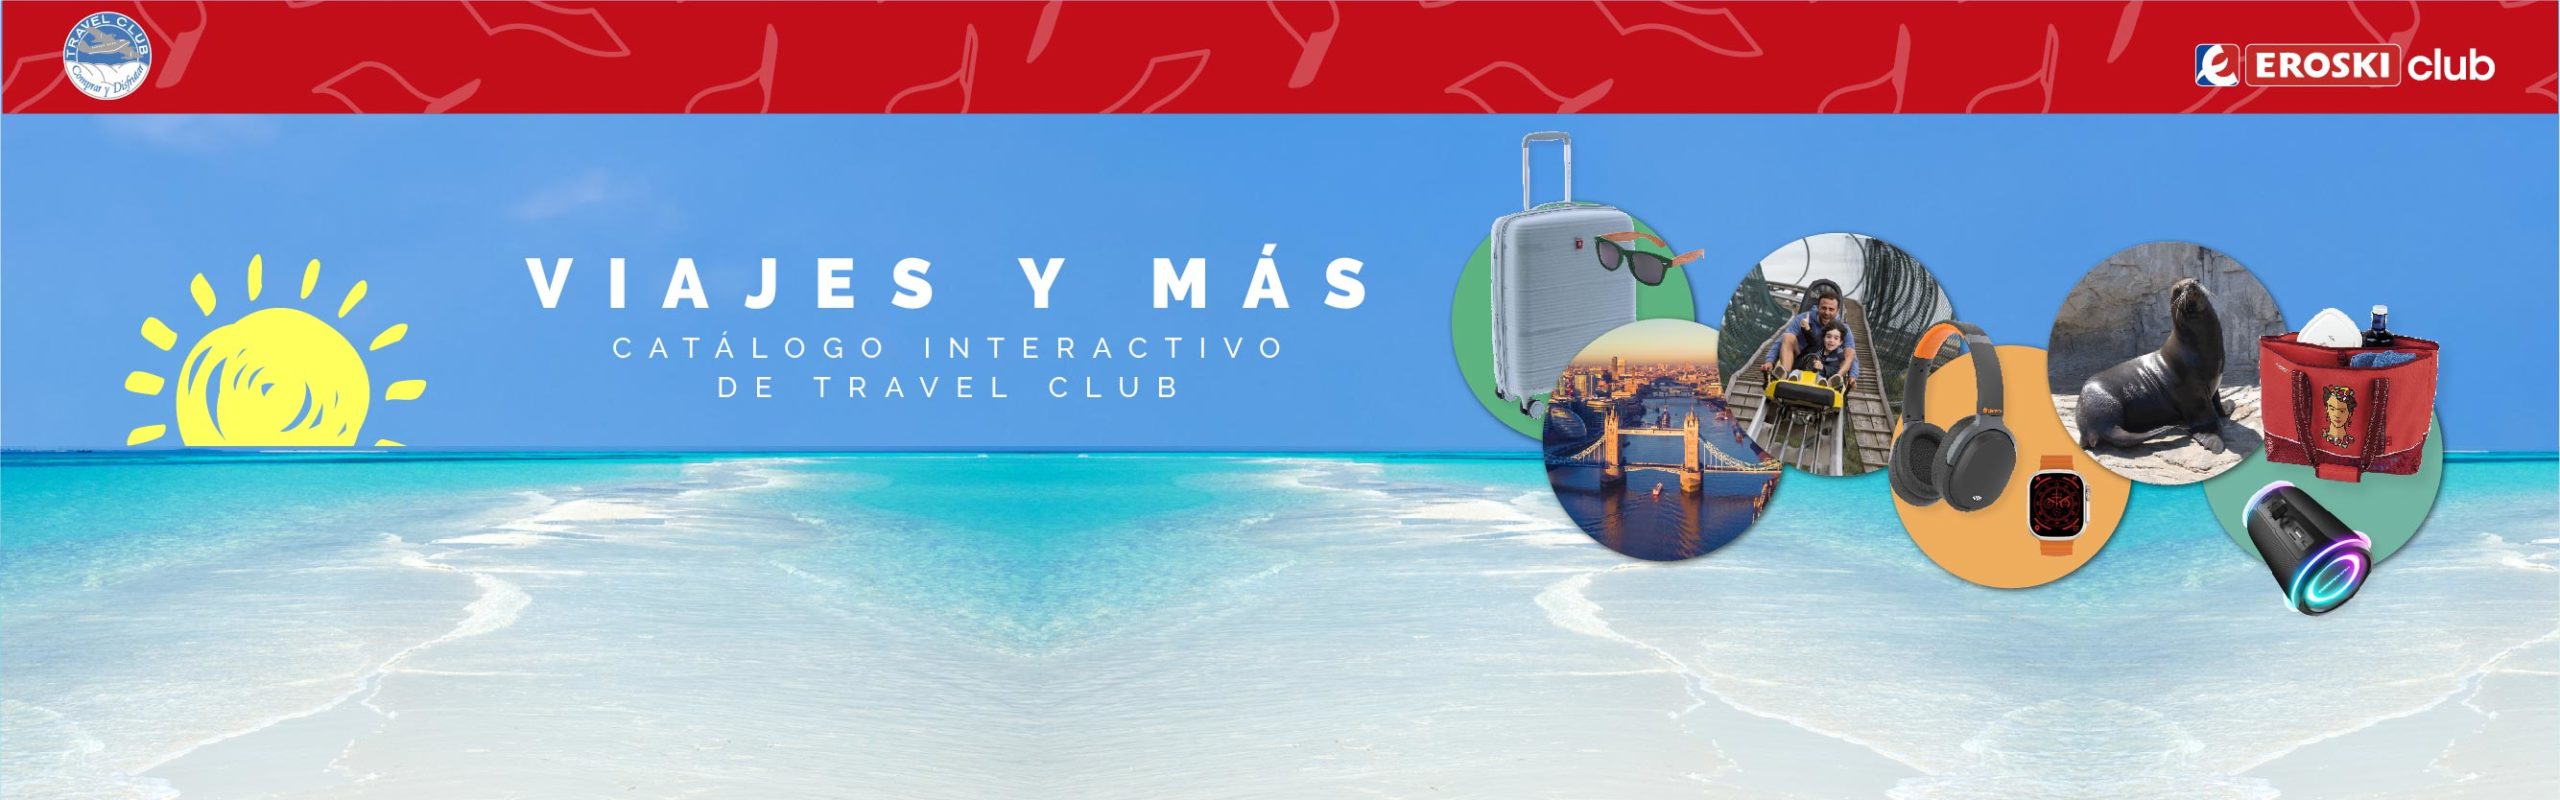 travel club eroski app